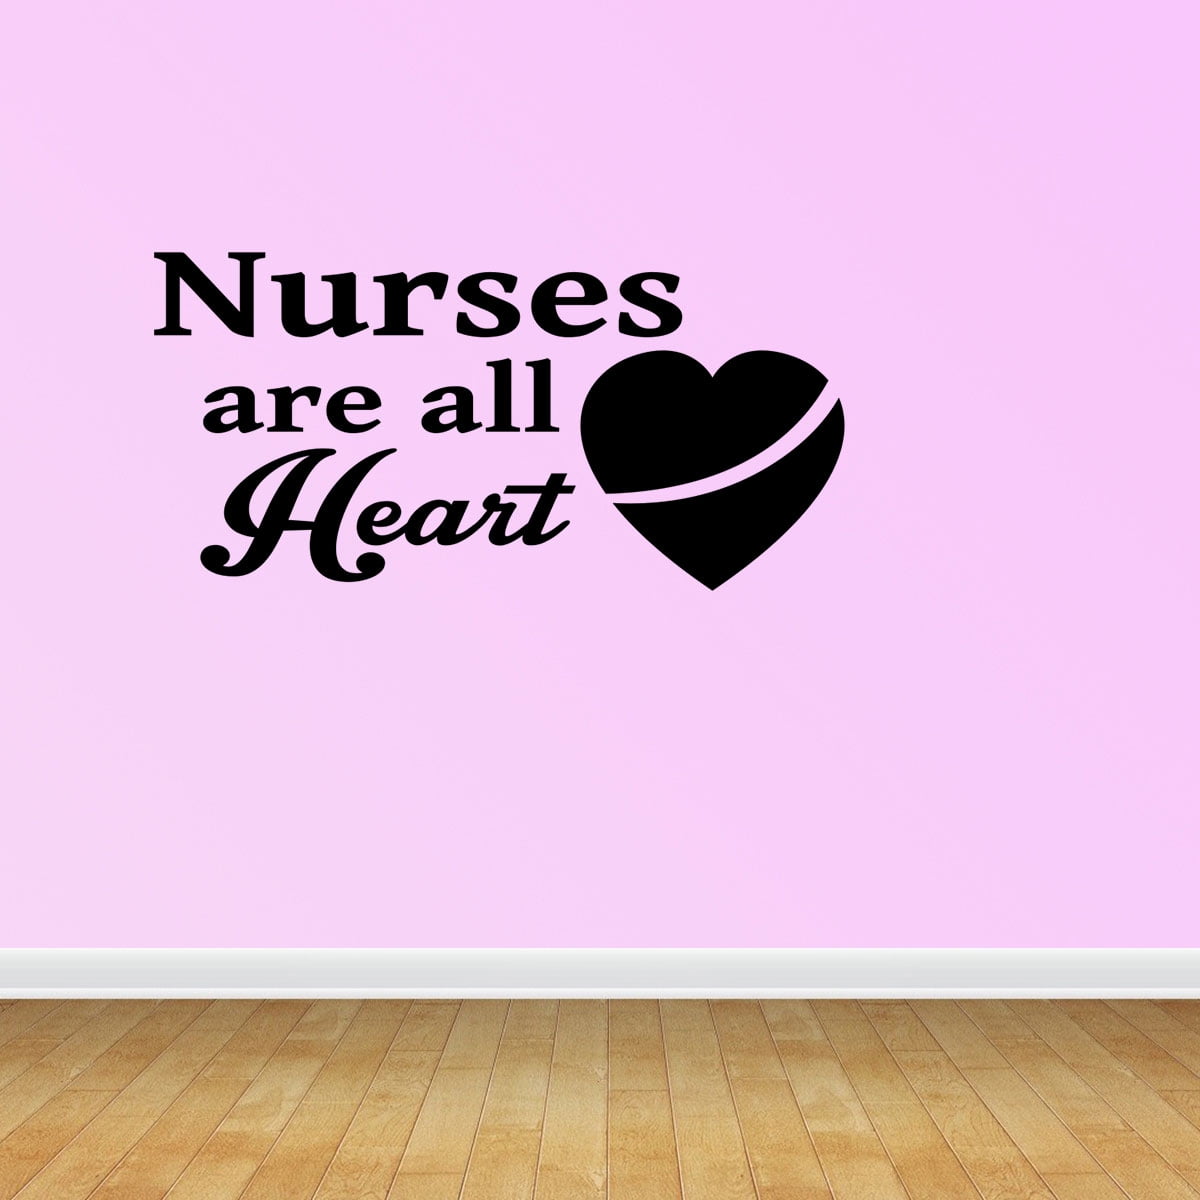 Nursing Is a Work of Heart Decal Nurses Medical Wall Sticker Quote Nurse Appreciation Gift Vinyl Lettering Decor